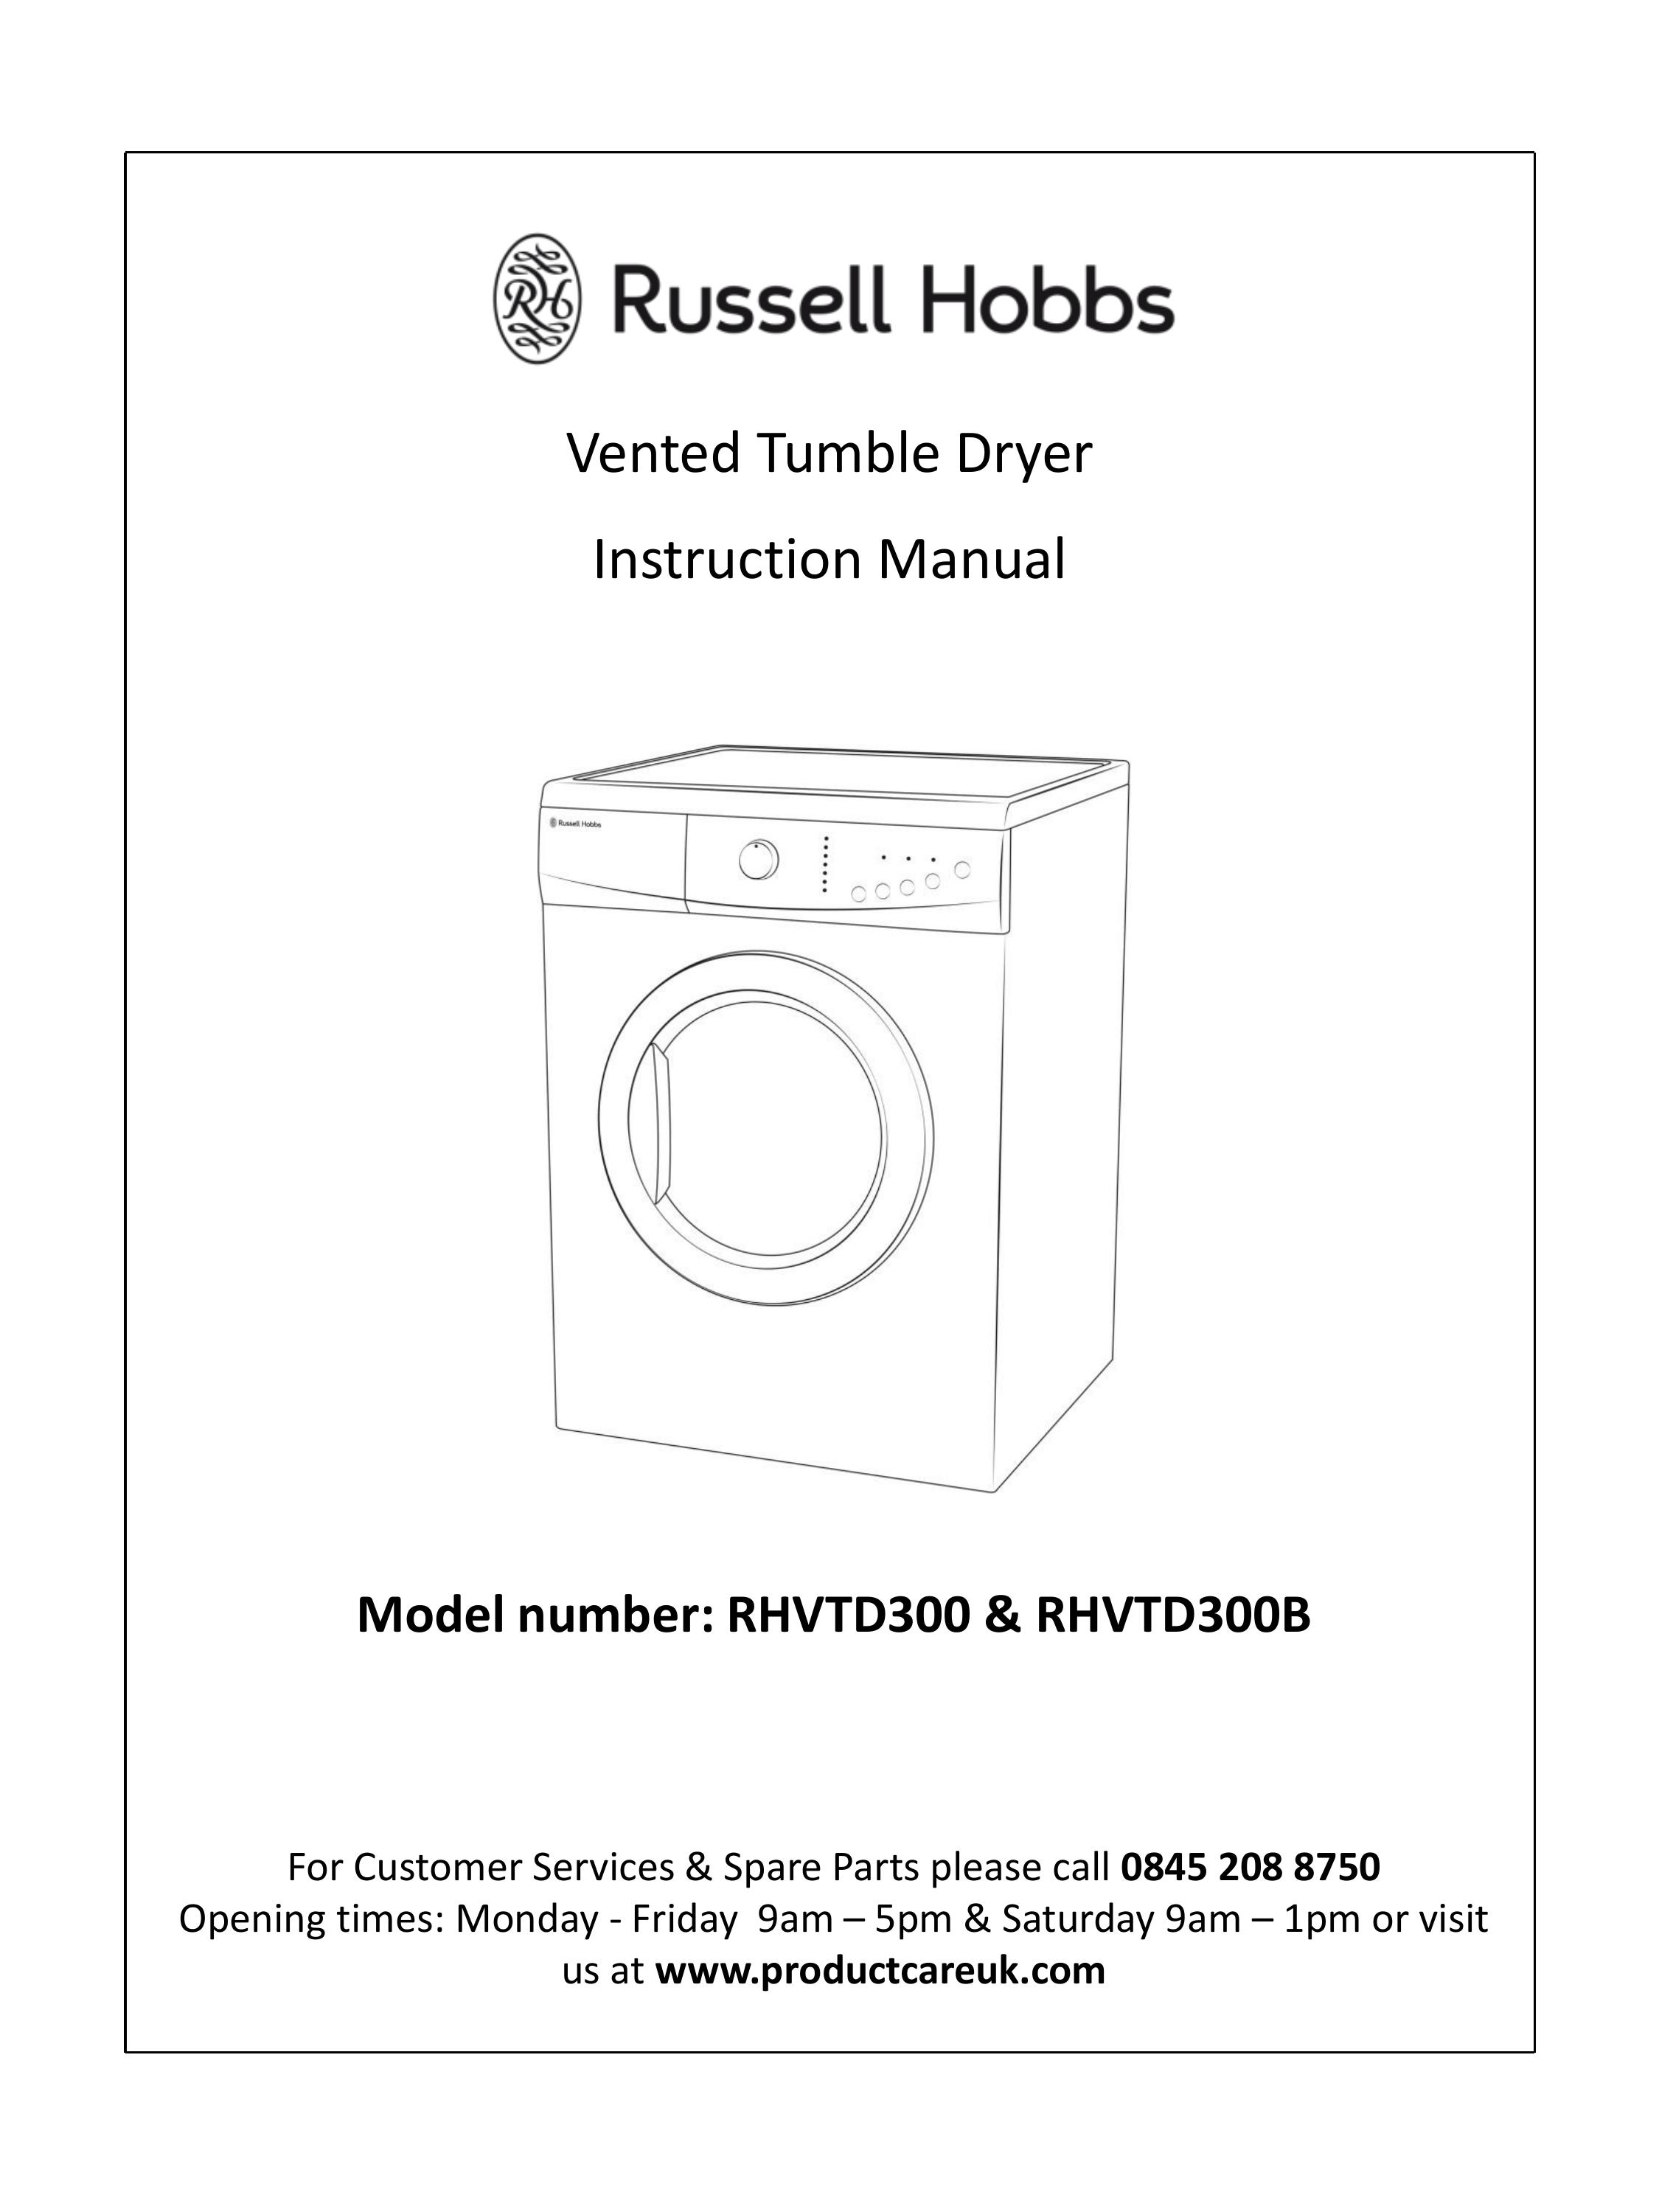 Russell Hobbs RHVTD300B Clothes Dryer User Manual